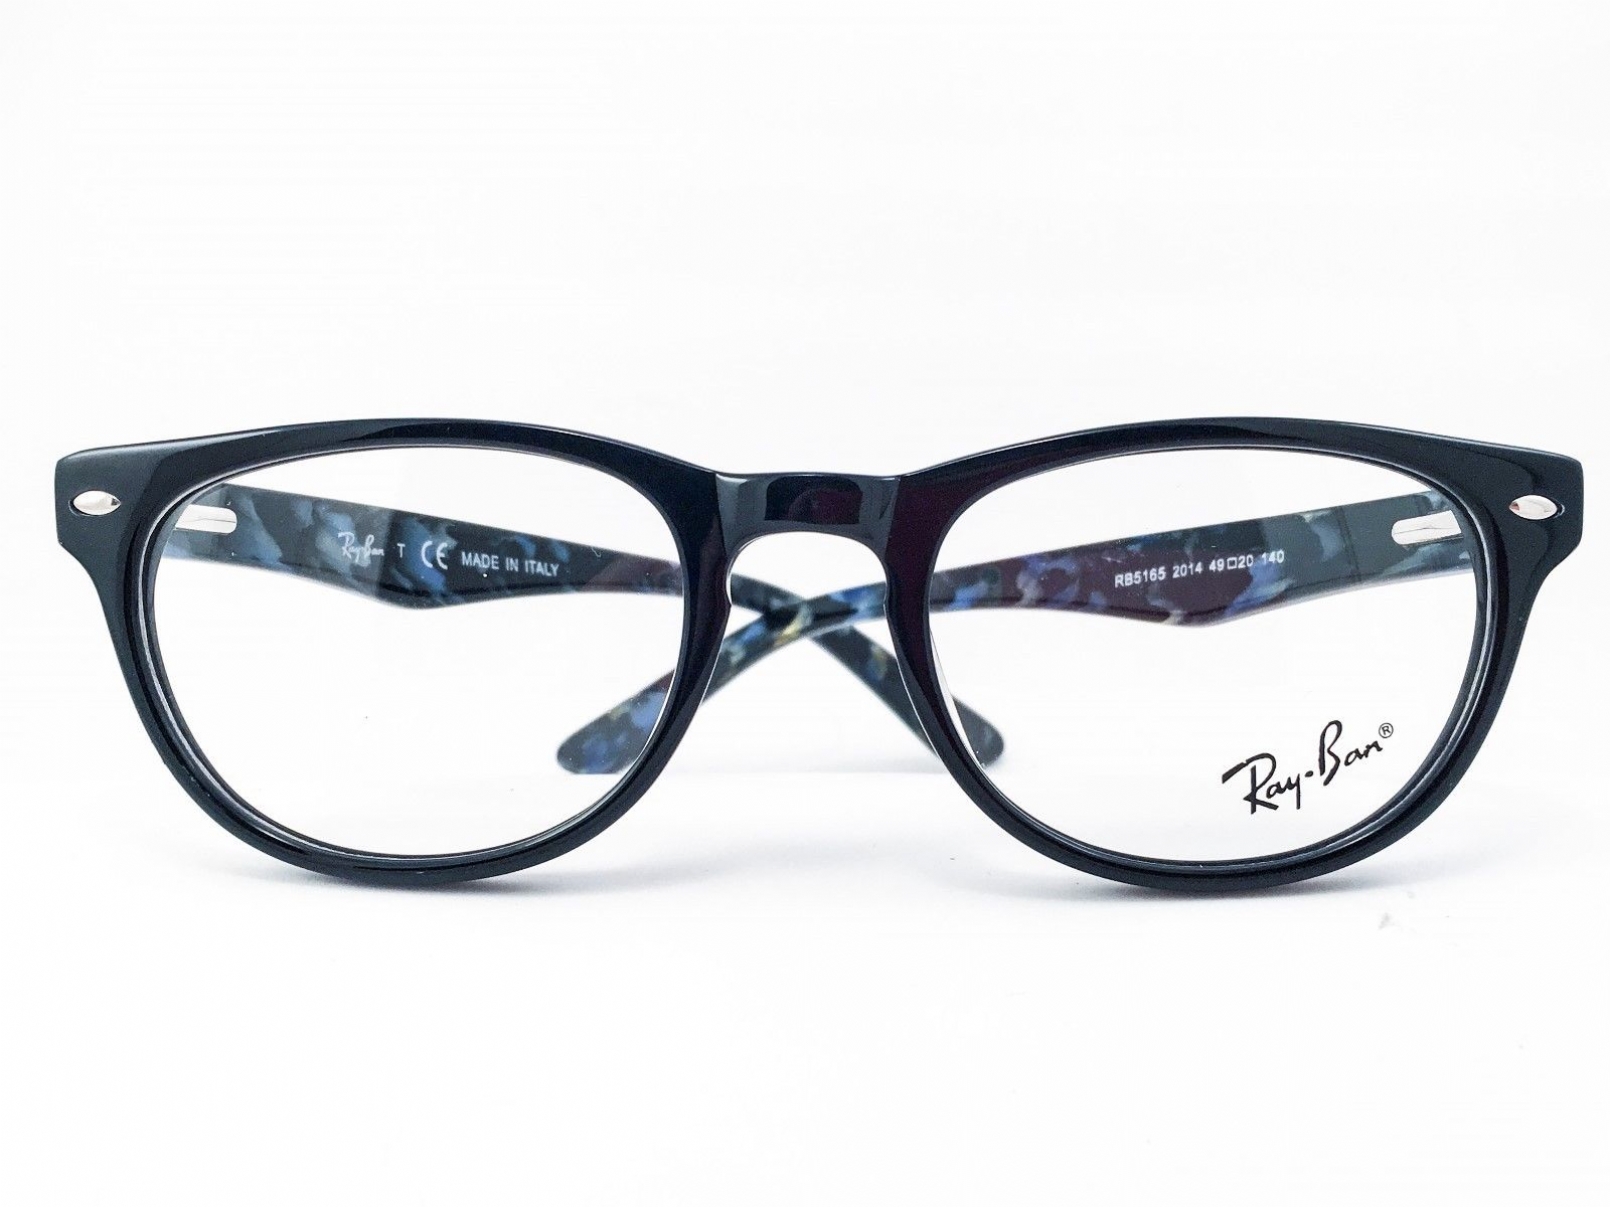 Ray Ban 5165 Eyeglasses